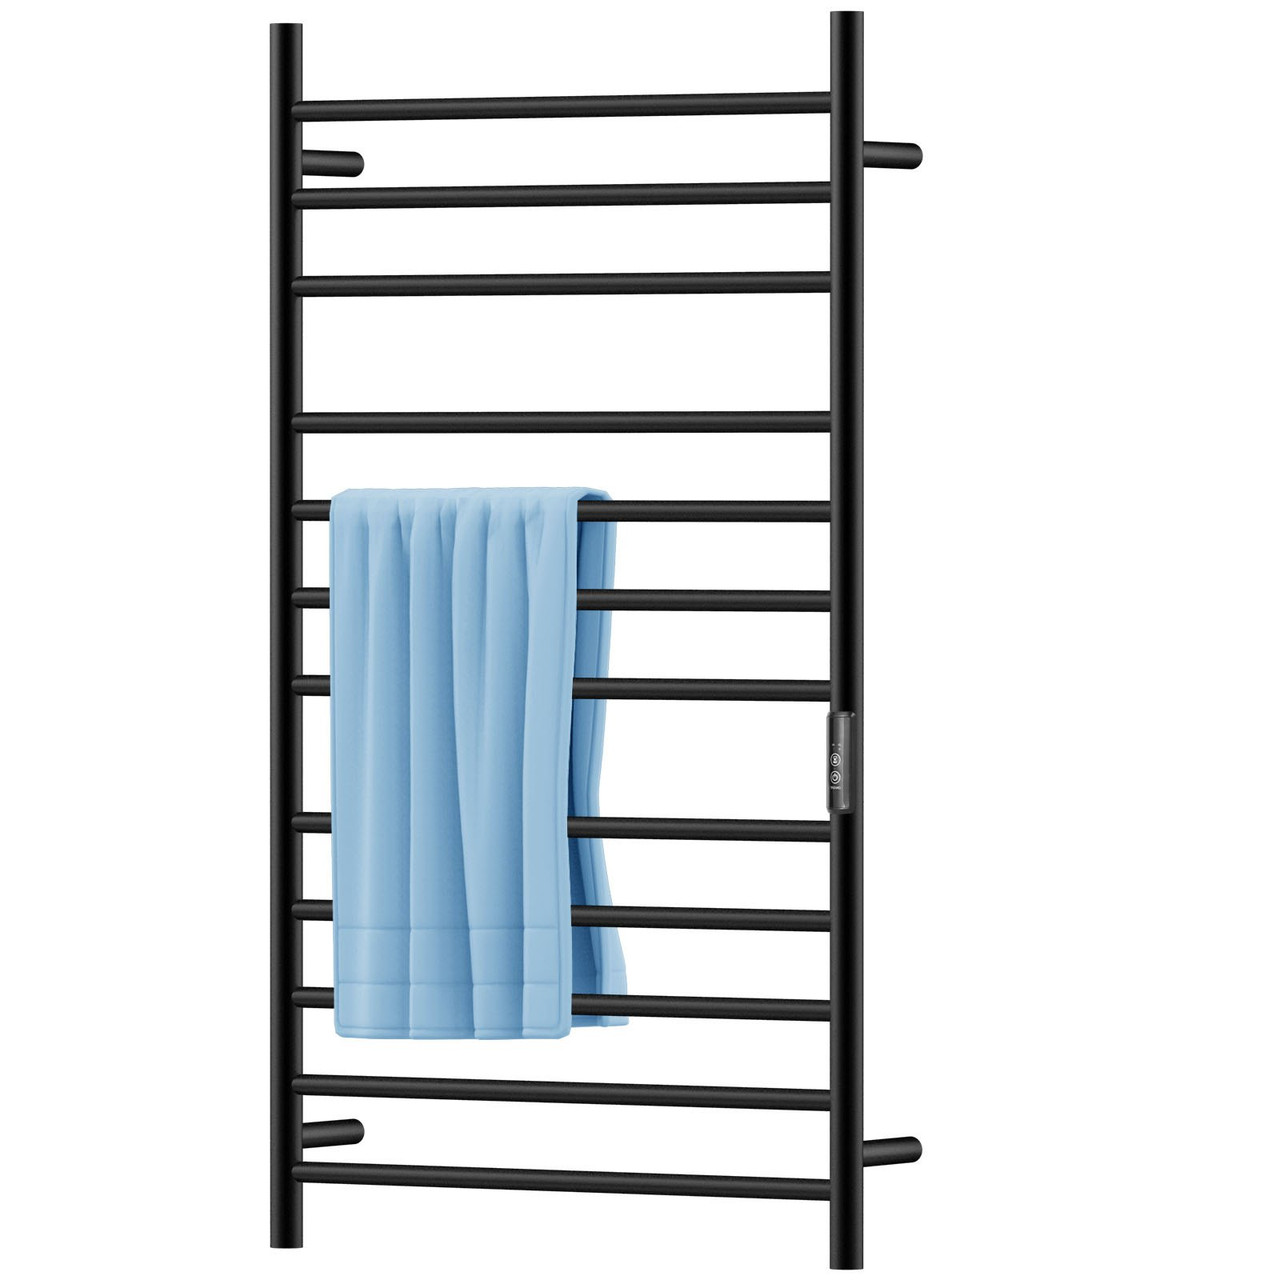 Heated Towel Rack, 12-Bar Towel Warmer Rack, Wall Mounted Electric Towel Warmer, Electric Towel Drying Rack w/Timer, Matte Black Stainless Steel Heated Towel Warmer for Bath, Plug-in/Hardwired